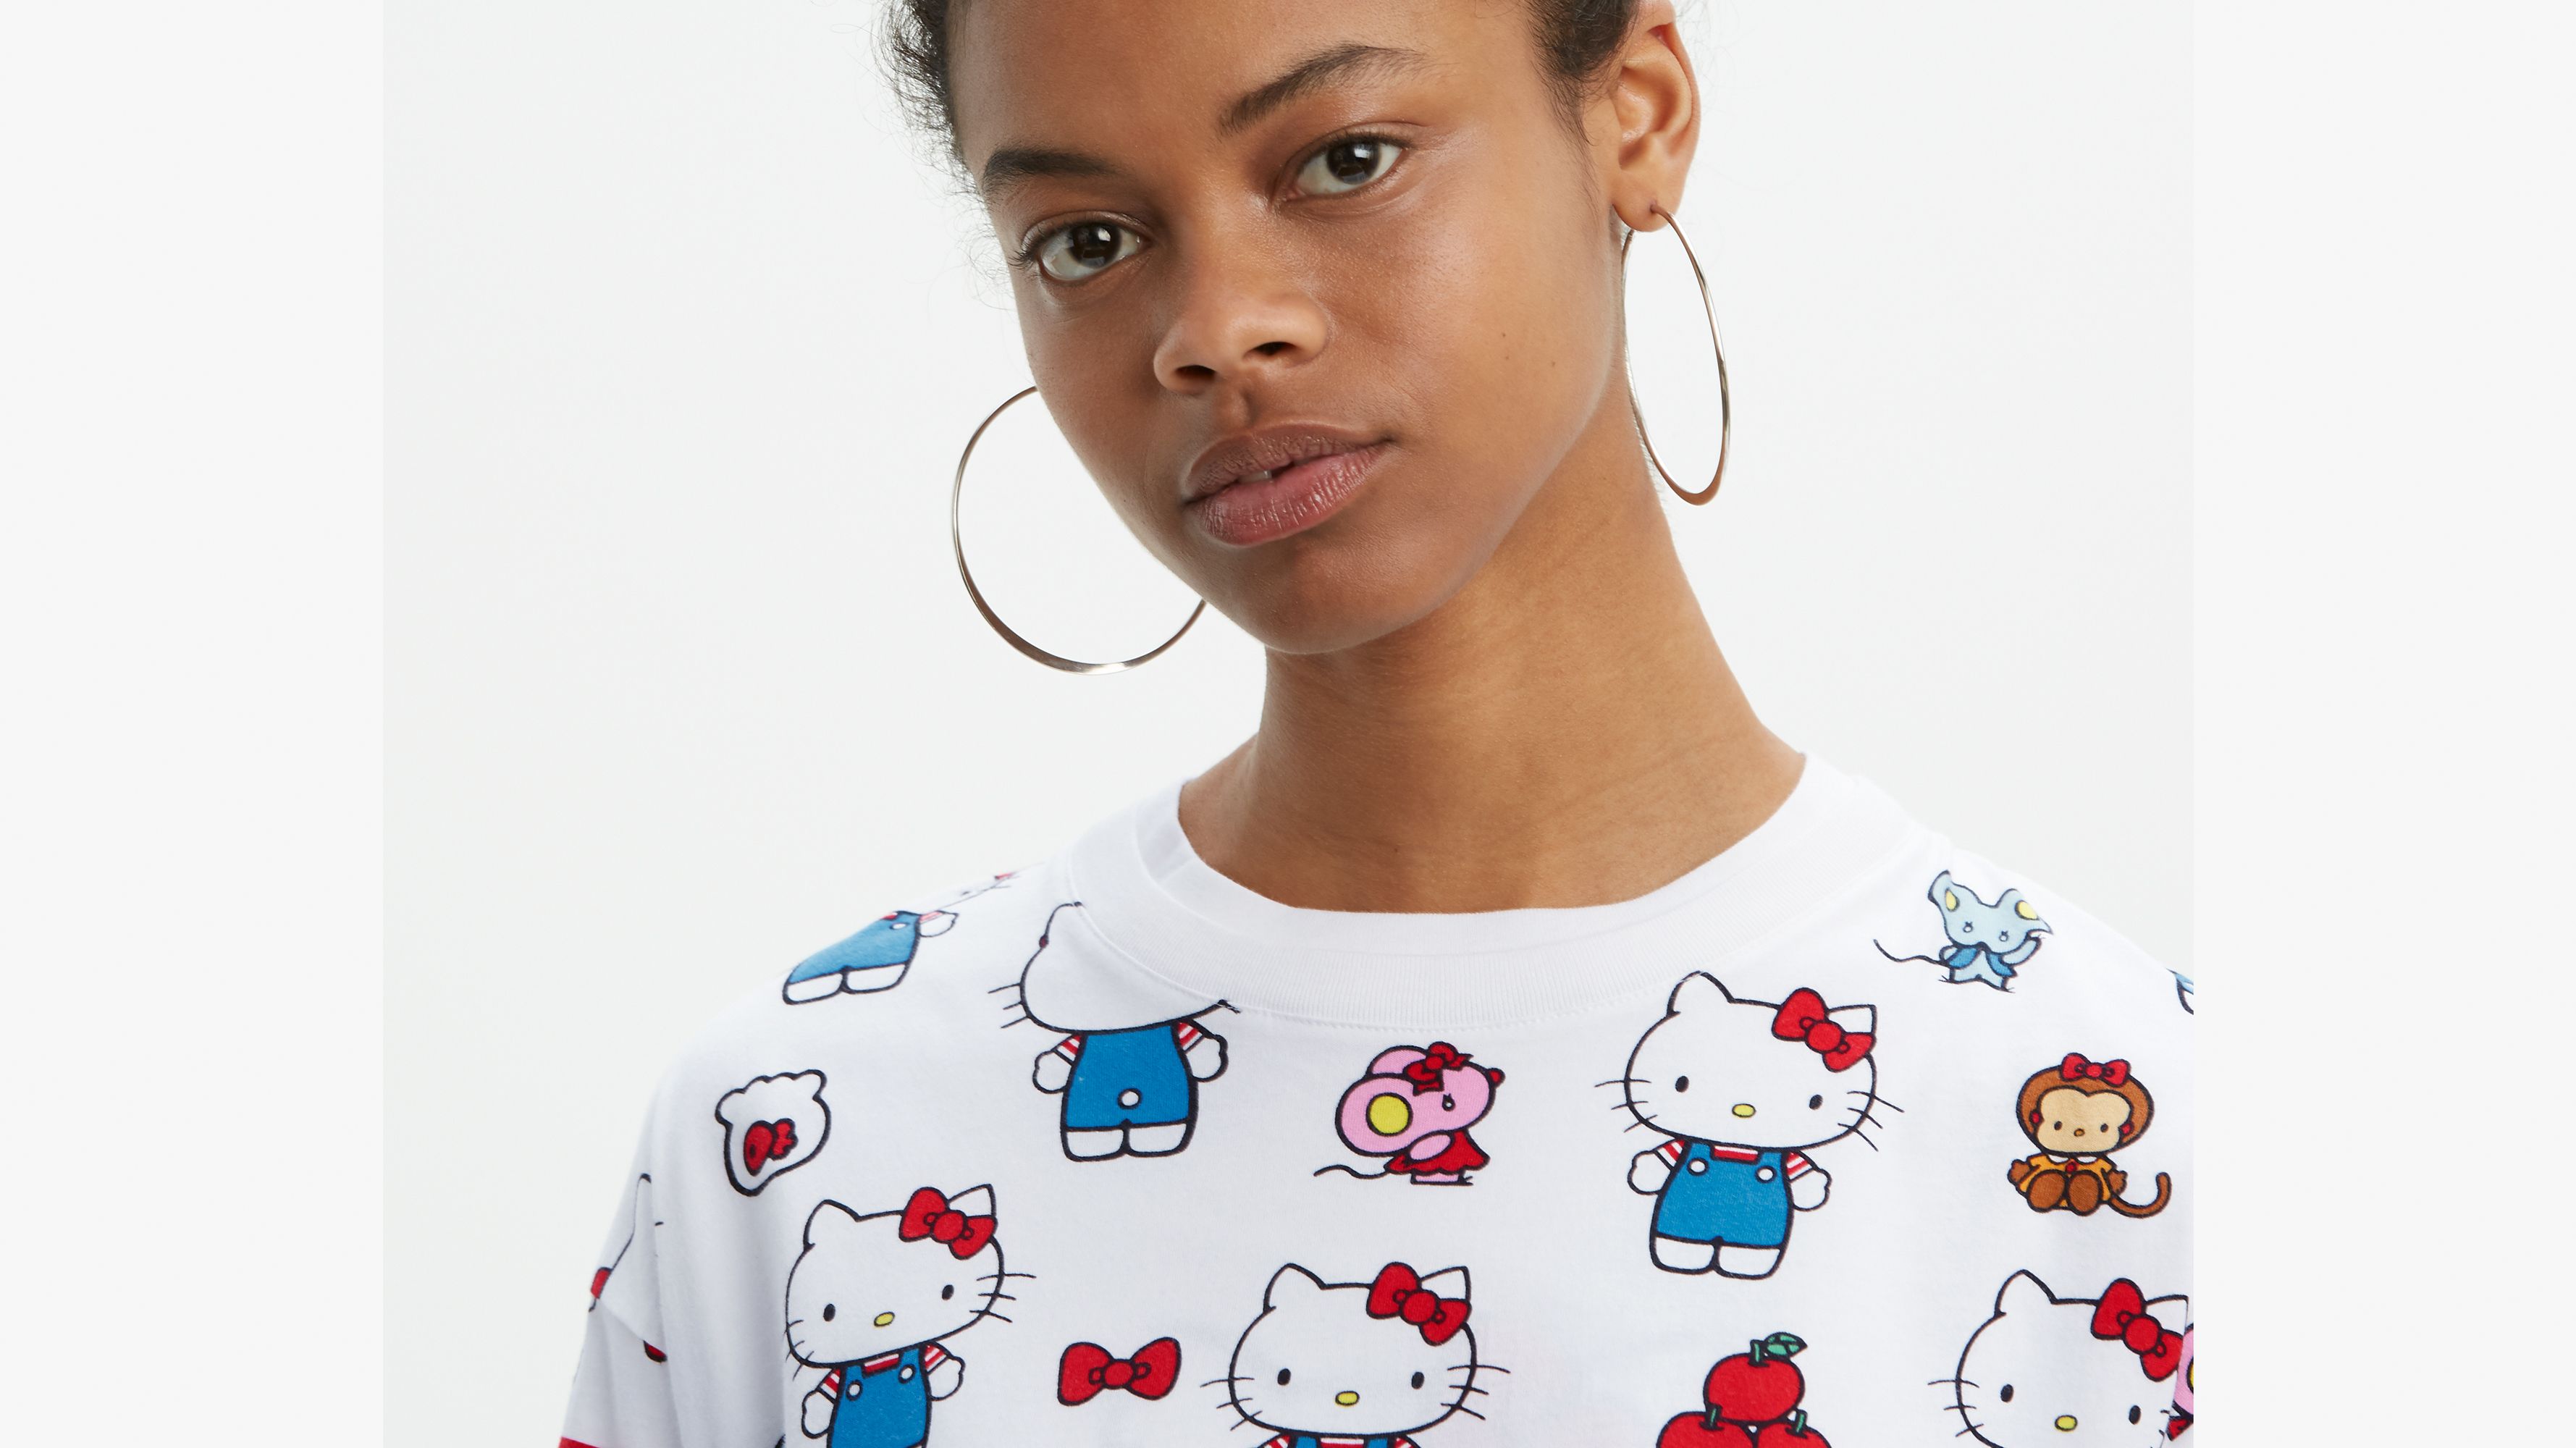 Louis Vuitton X Hello Kitty, Women's Fashion, Tops, Shirts on